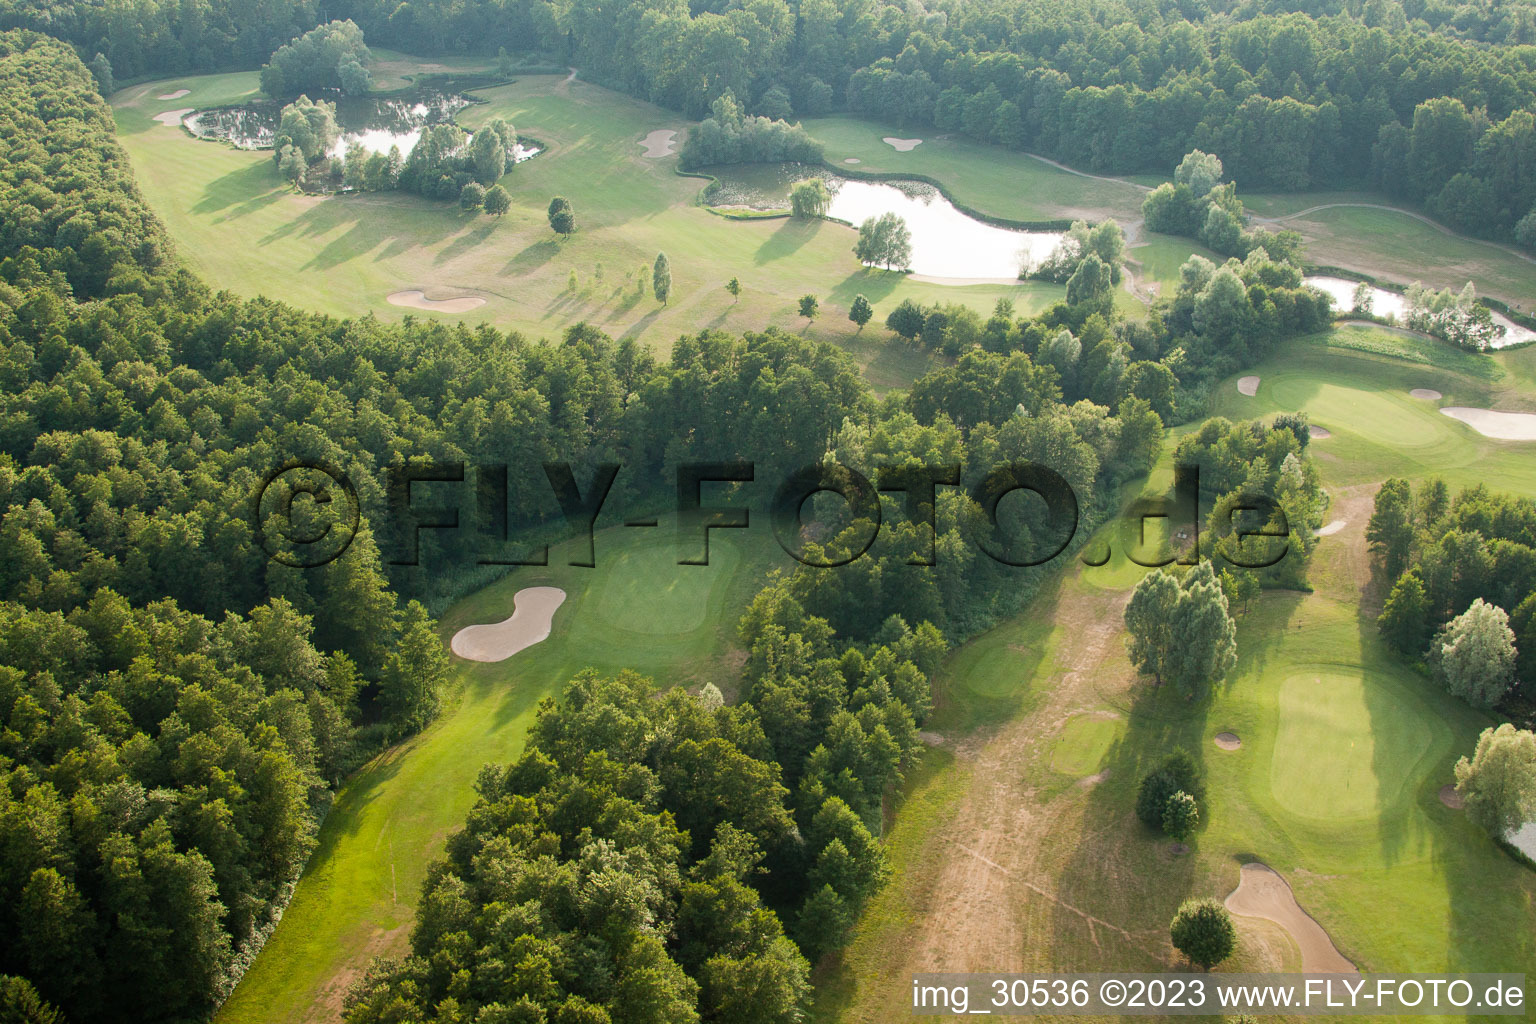 Golf club Soufflenheim Baden-Baden in Soufflenheim in the state Bas-Rhin, France seen from a drone